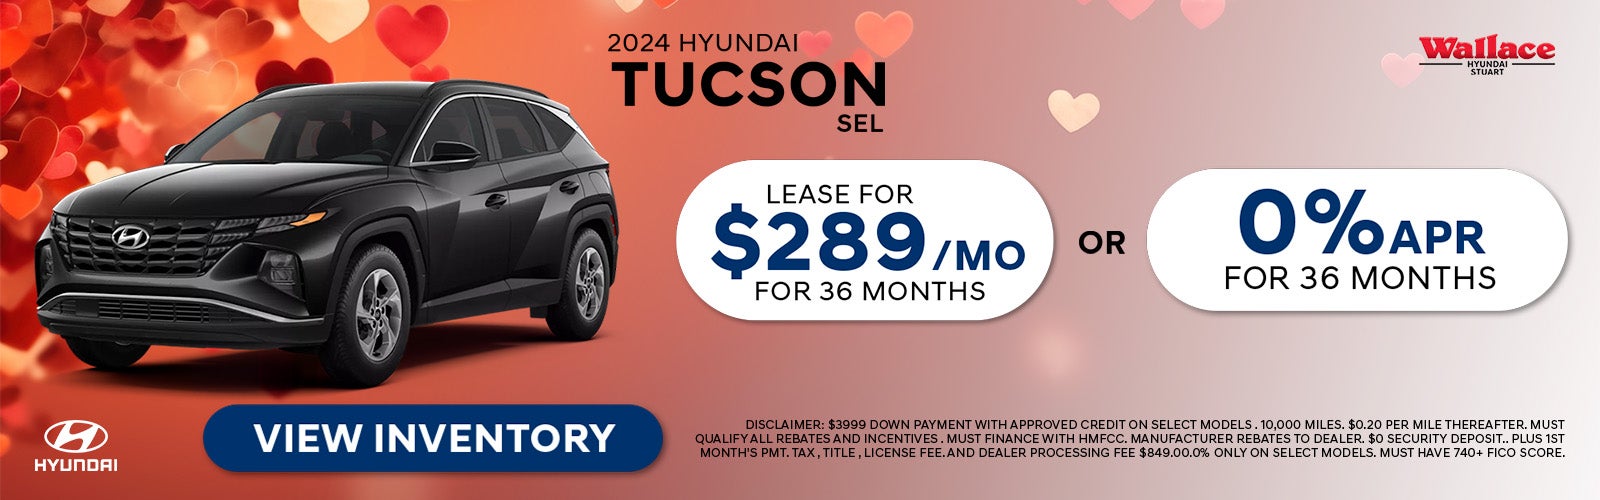 Hyundai Tucson Special Offer